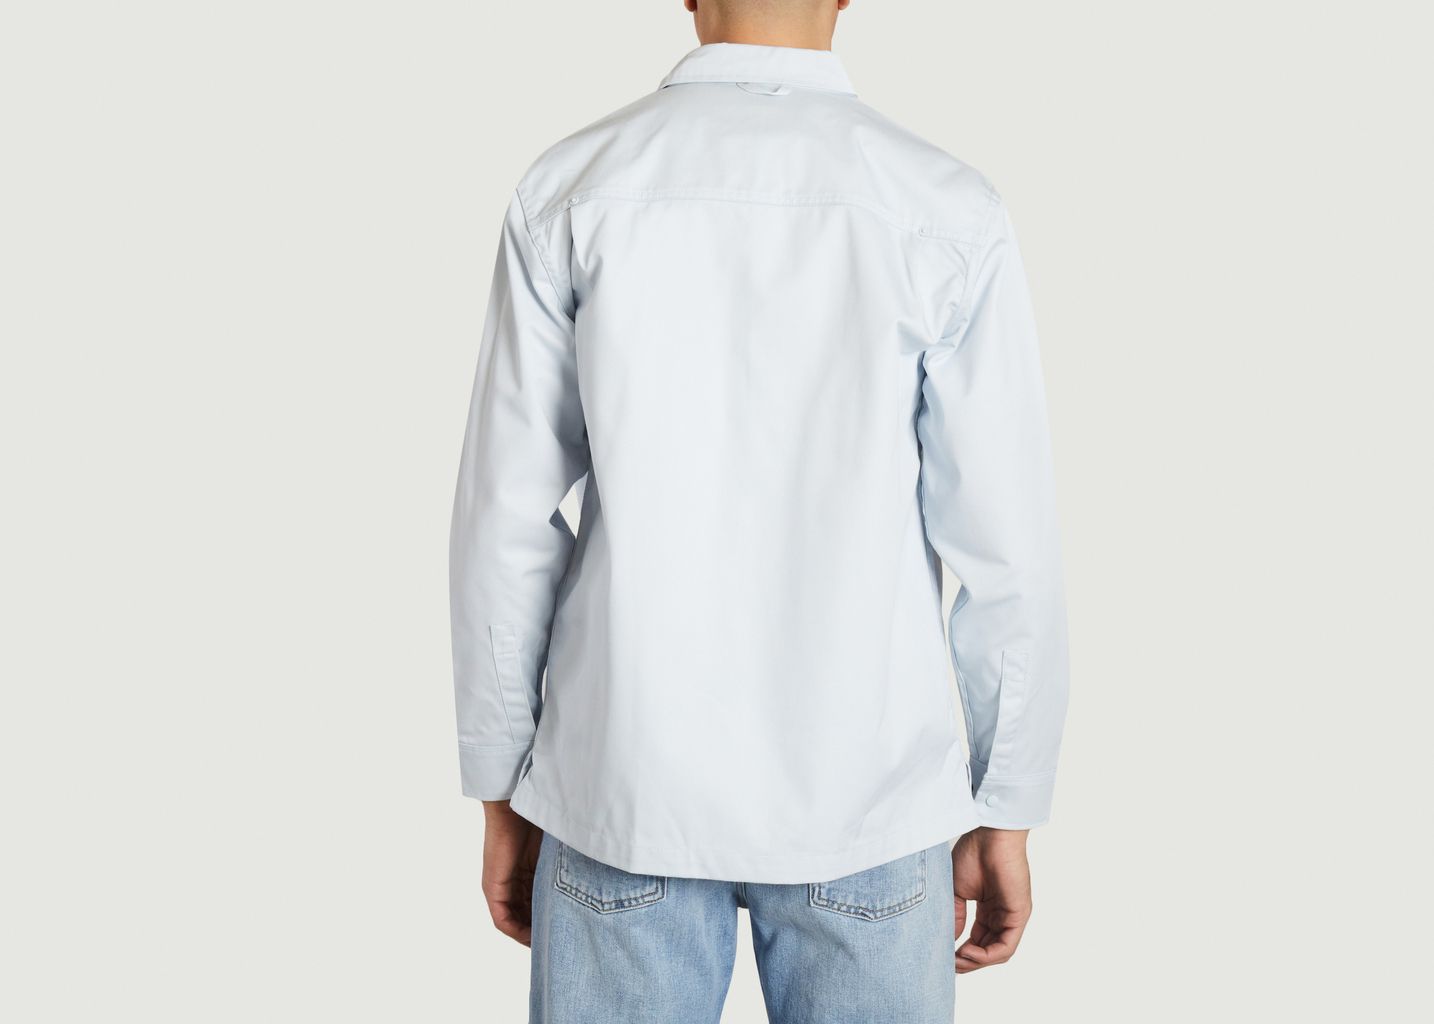 Button down shirt - M.C. Overalls